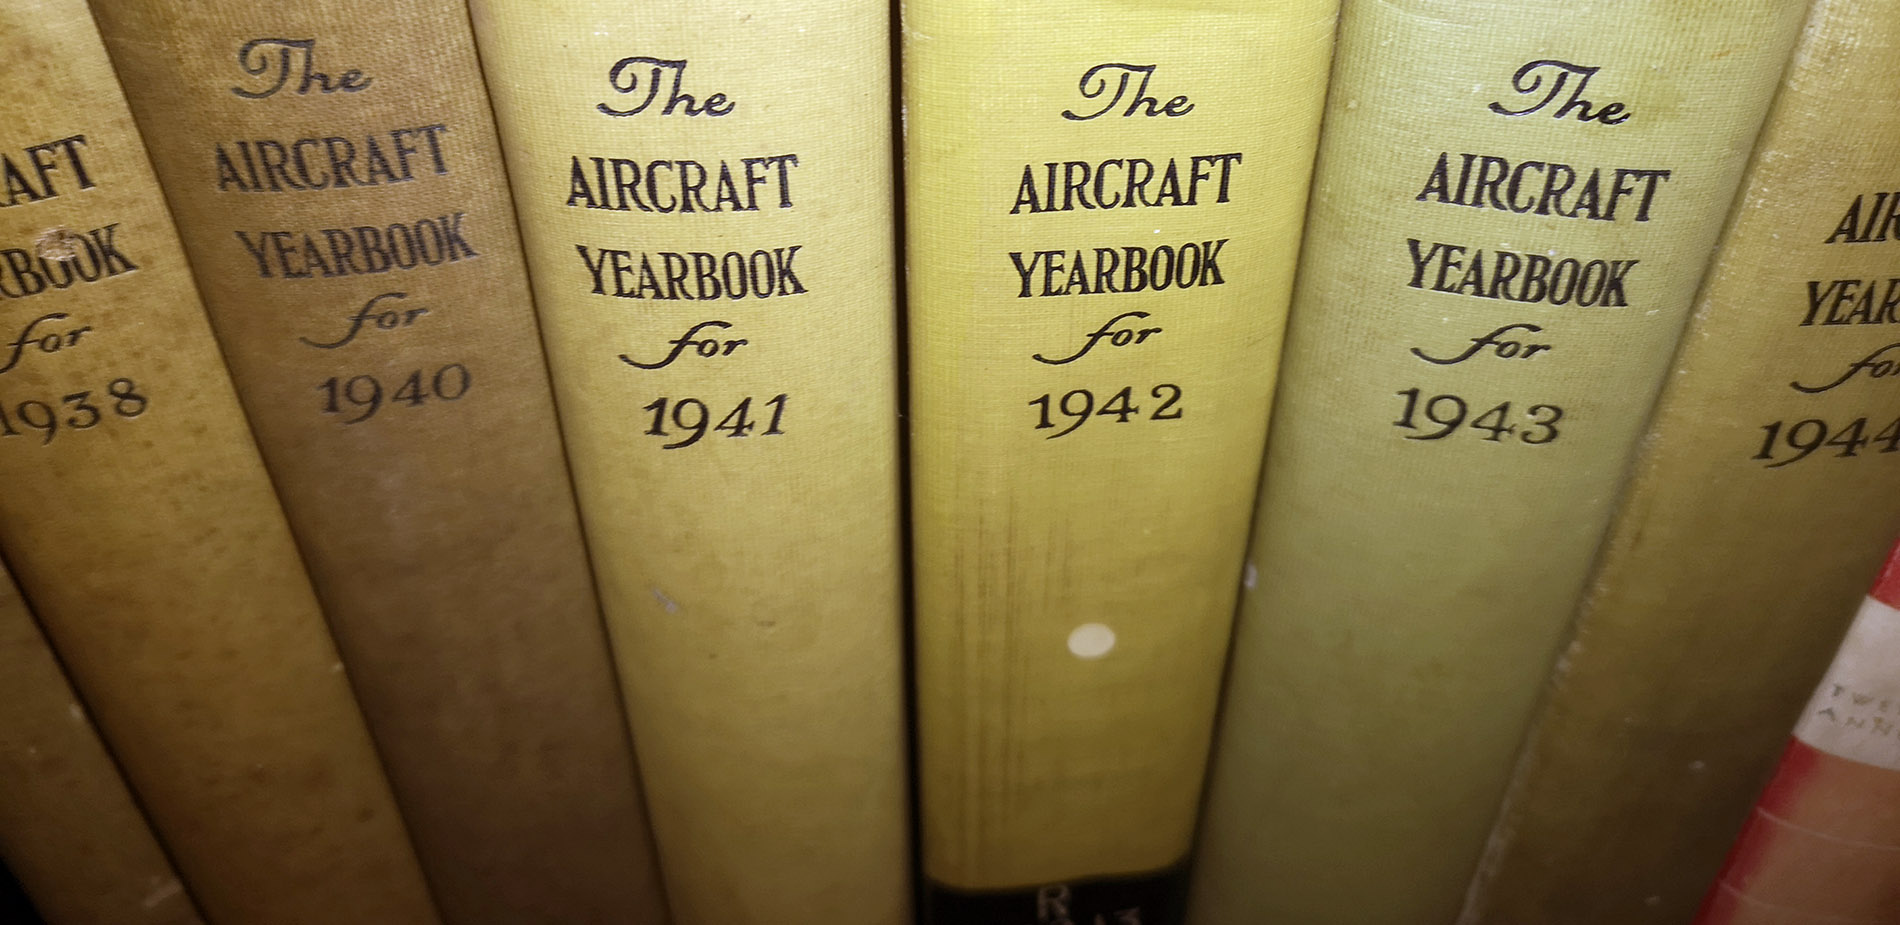 Aircraft Year books